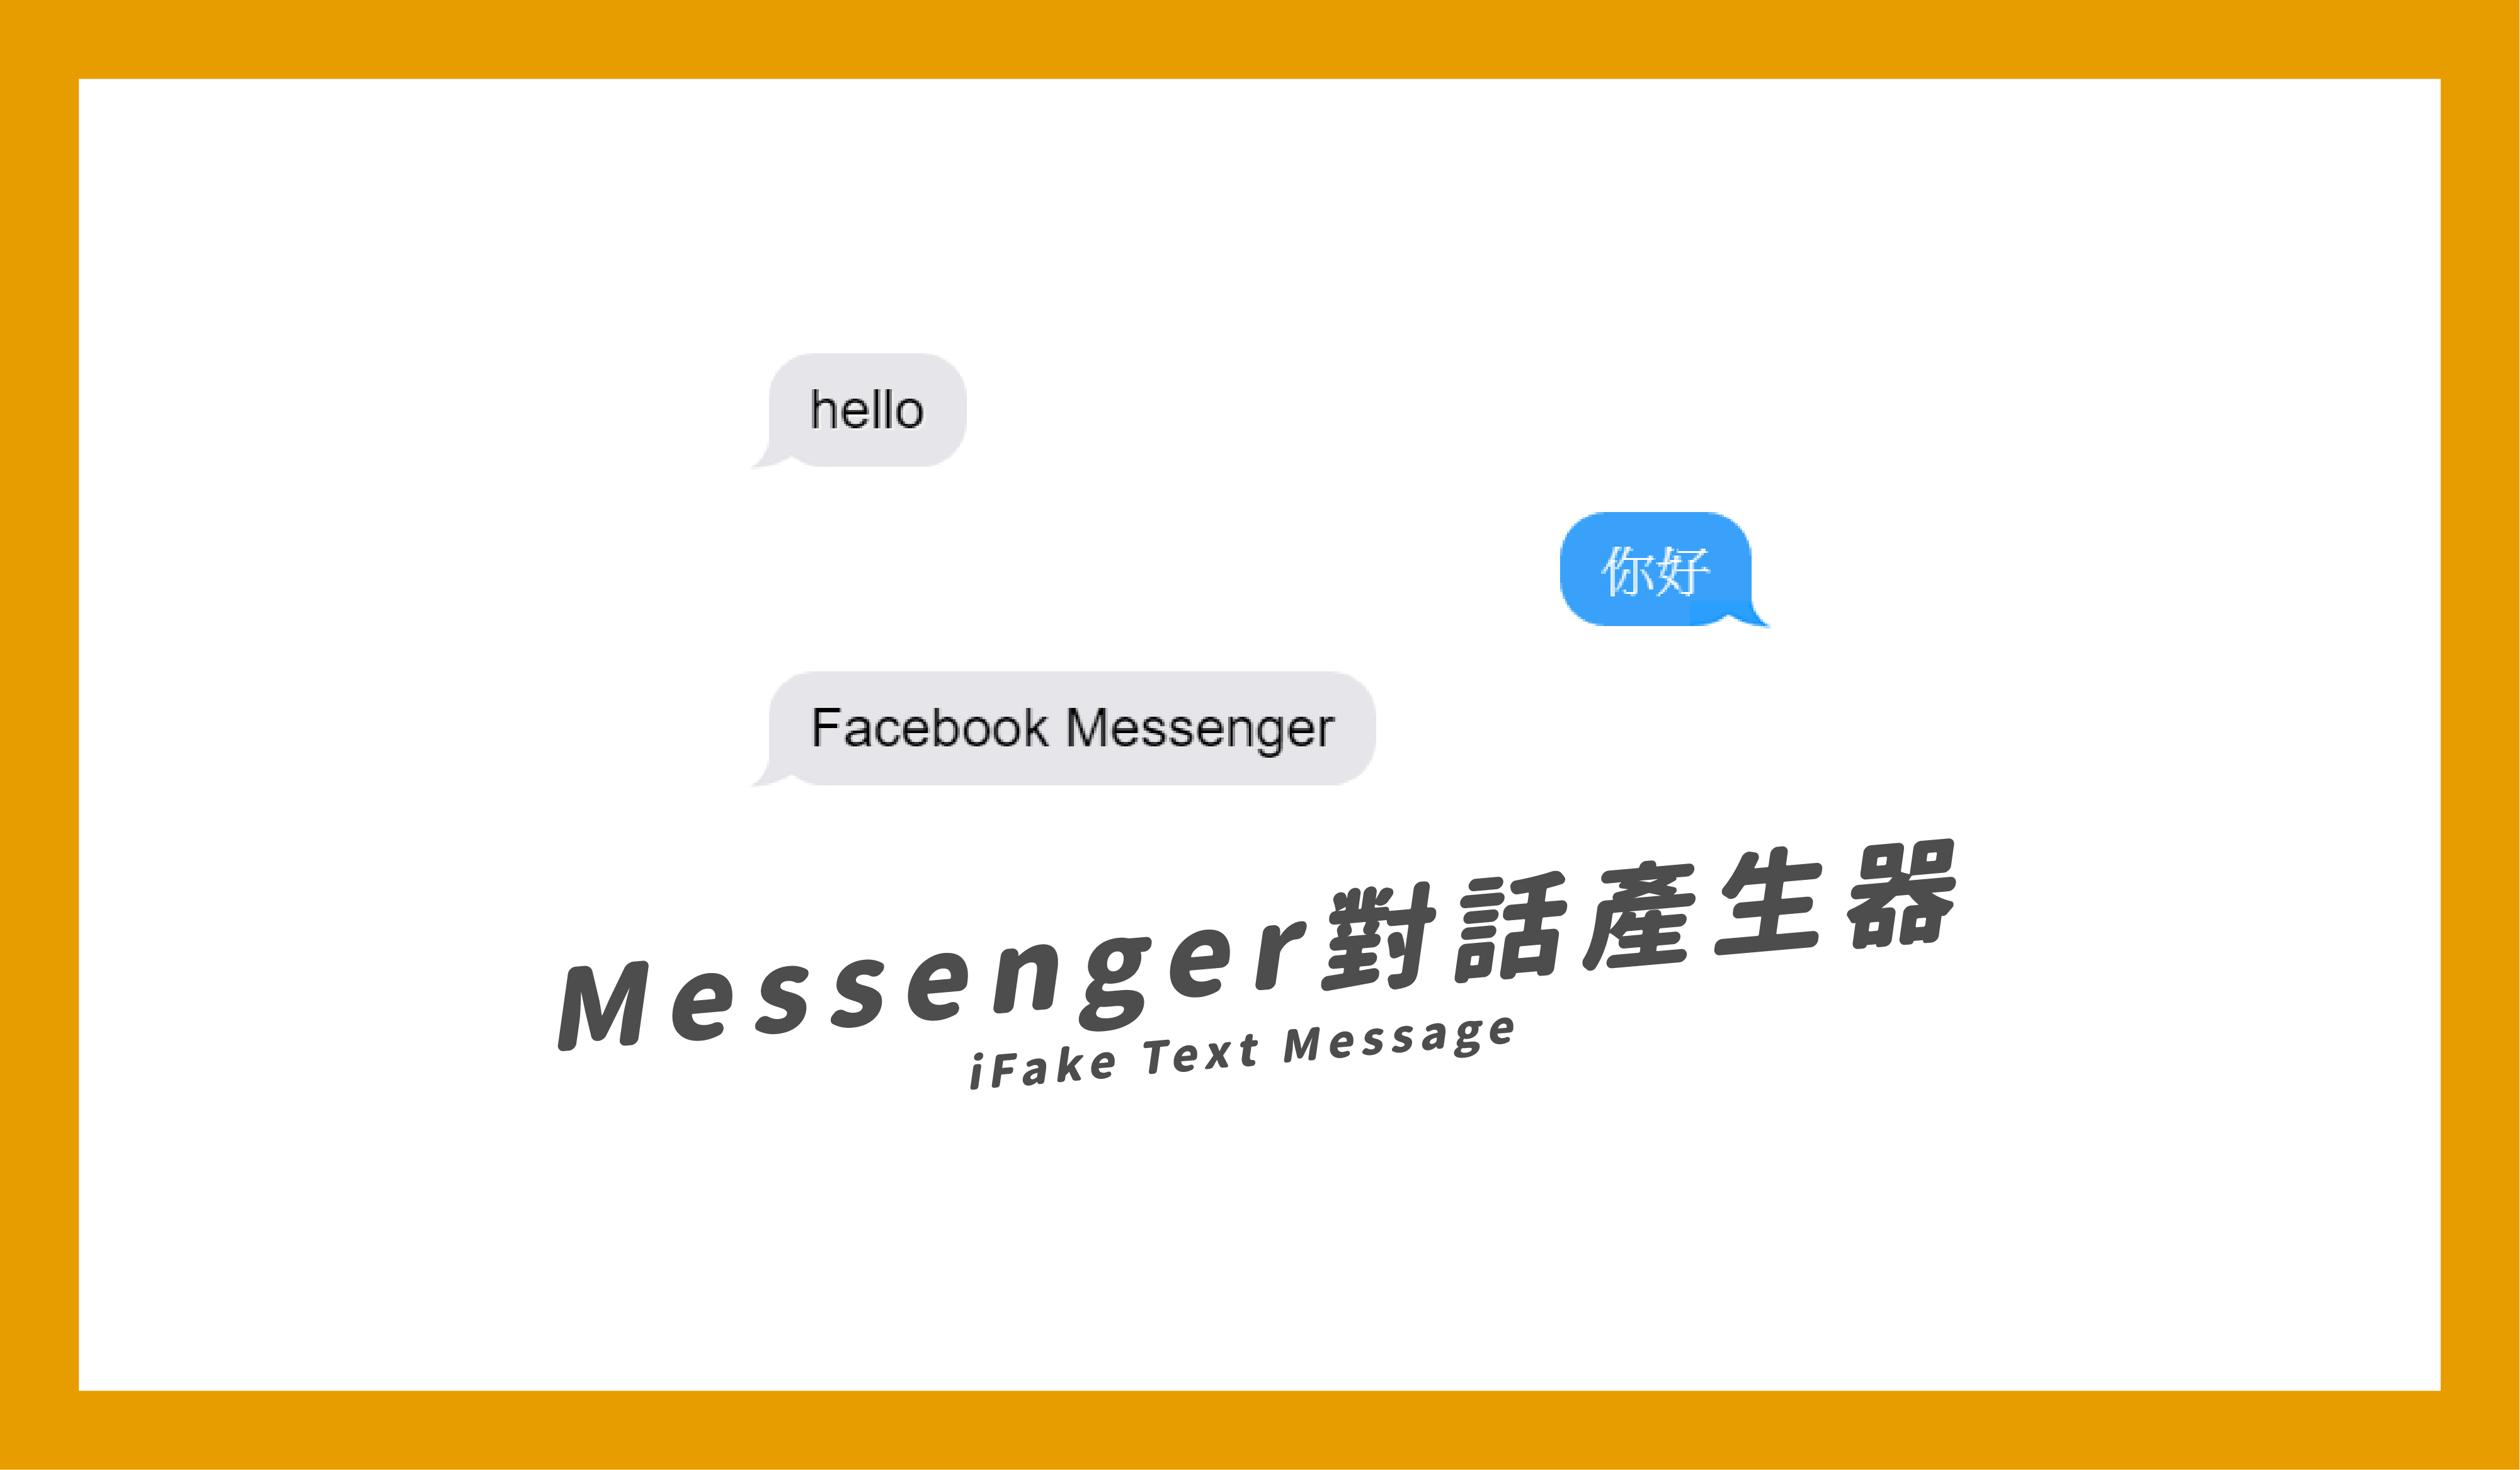 Messenger聊天對話產生器